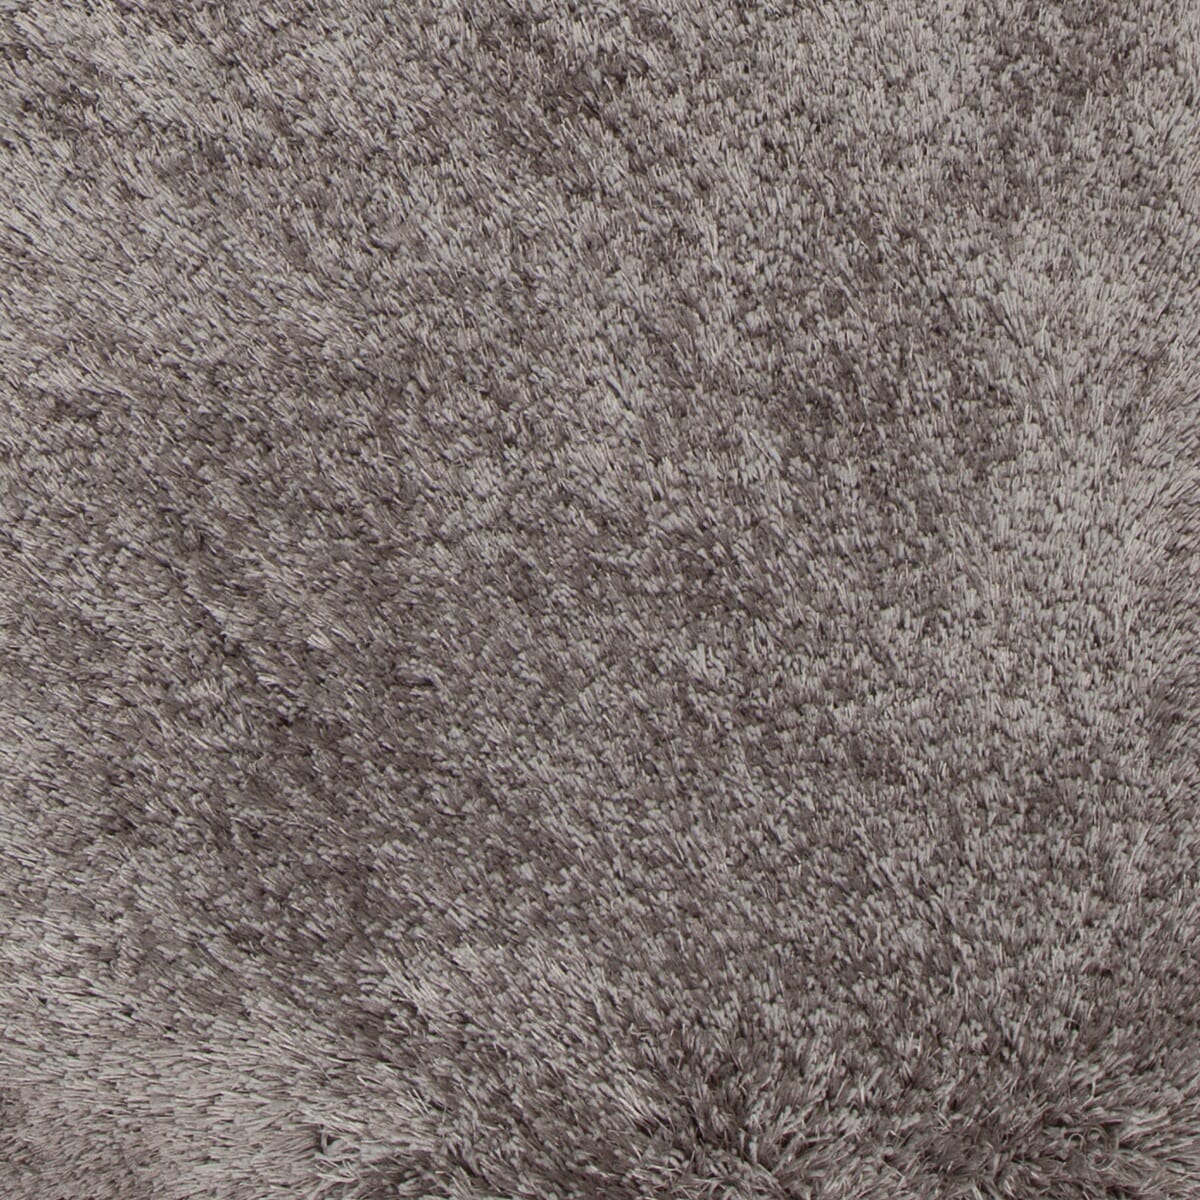 Chandra Roxy Rox-47602 Taupe Shag Area Rug